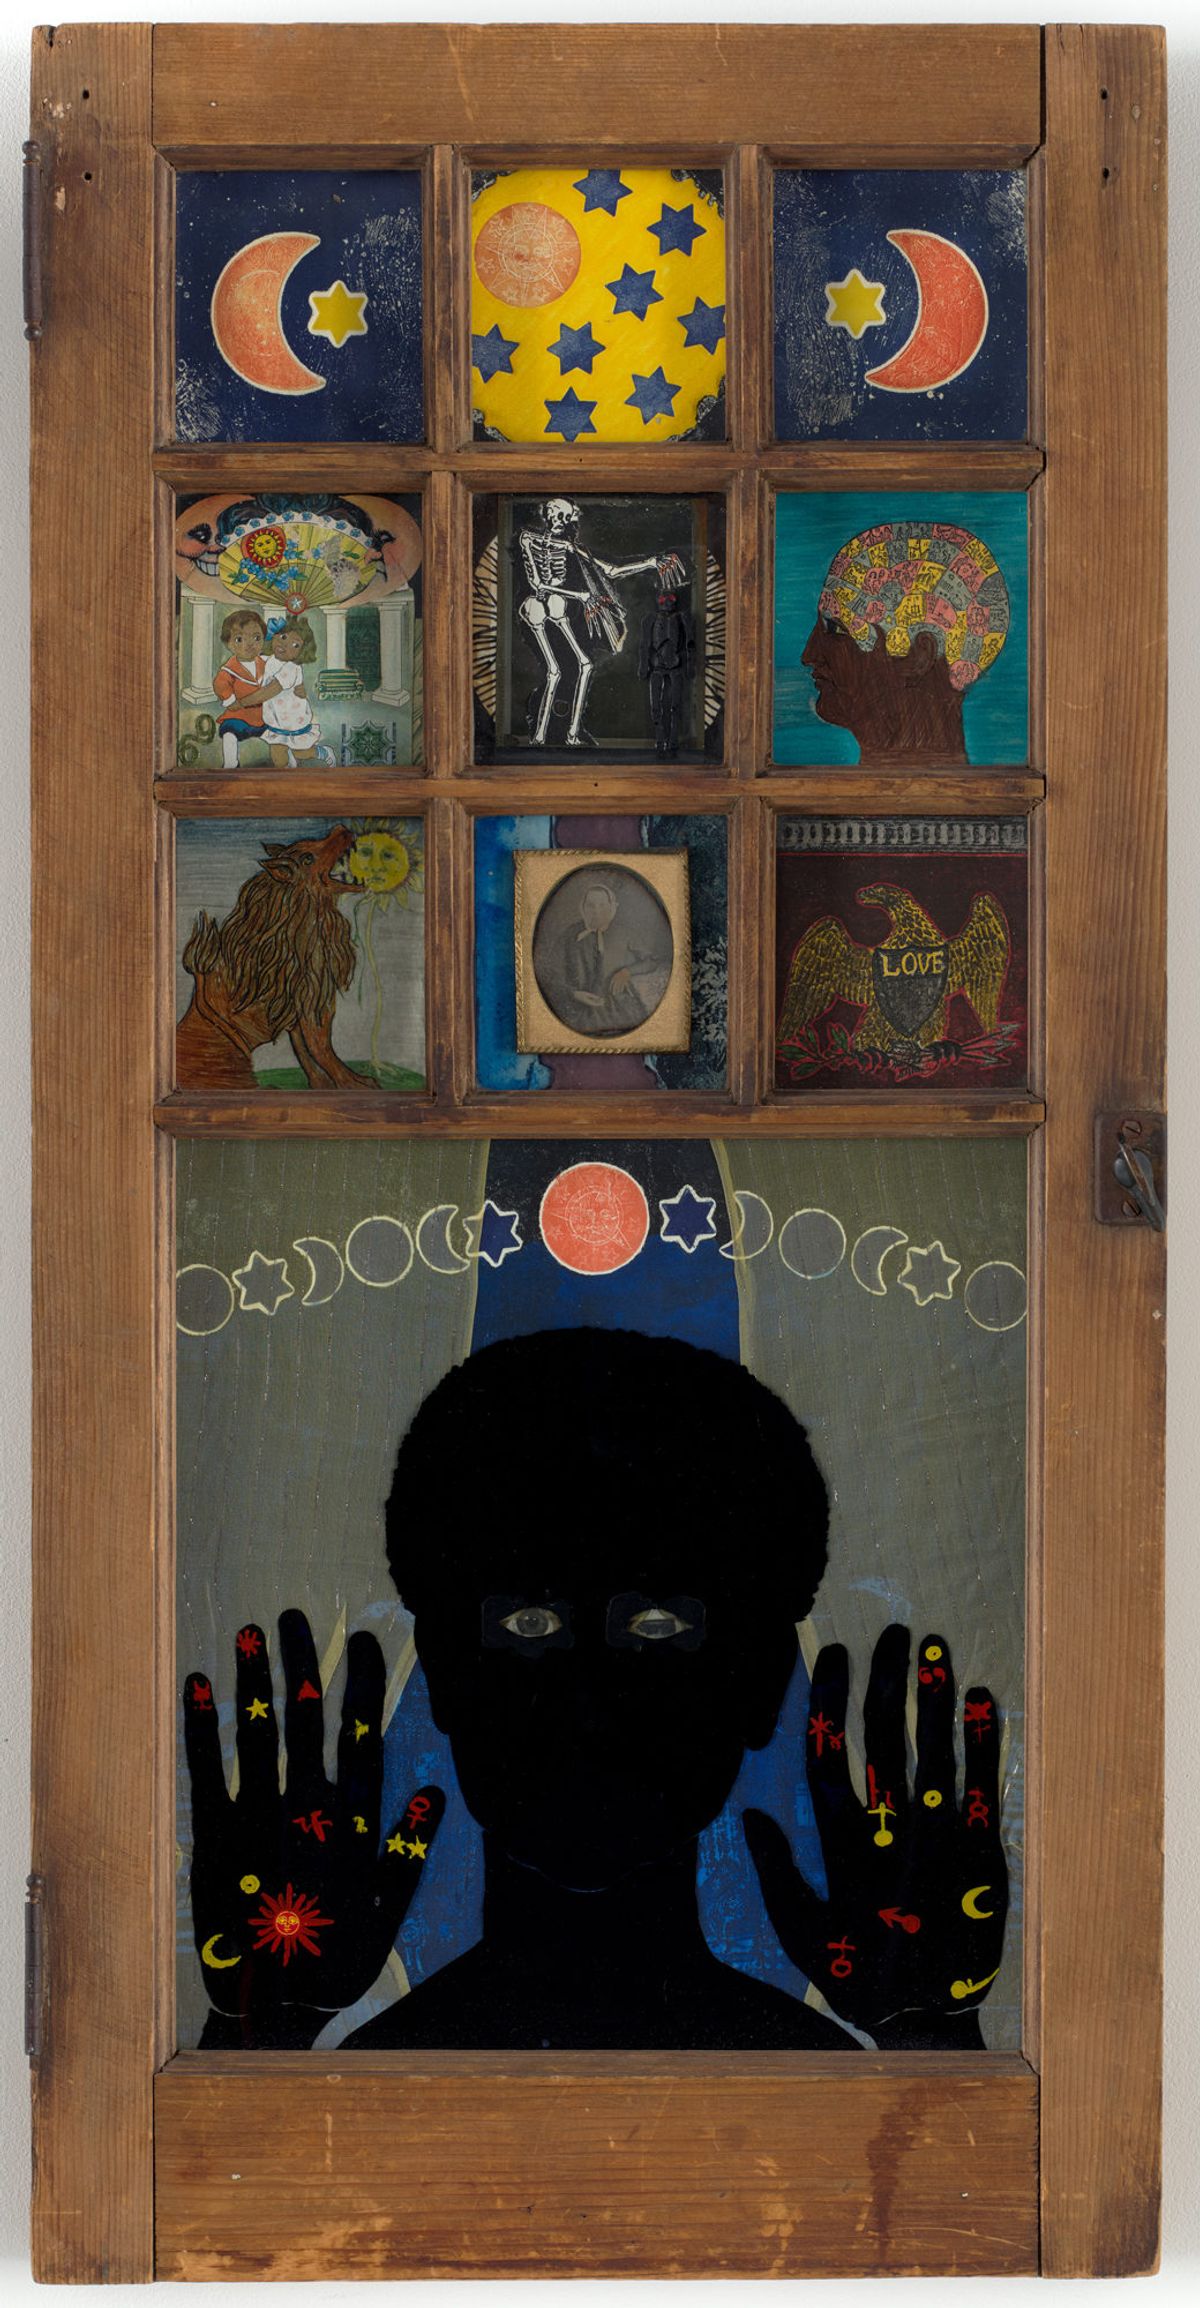 Betye Saar, Black Girl’s Window, 1969 © 2019 Betye Saar, courtesy the artist and Roberts Projects, Los Angeles. Digital Image © 2018 The Museum of Modern Art, New York. Photo: Rob Gerhardt